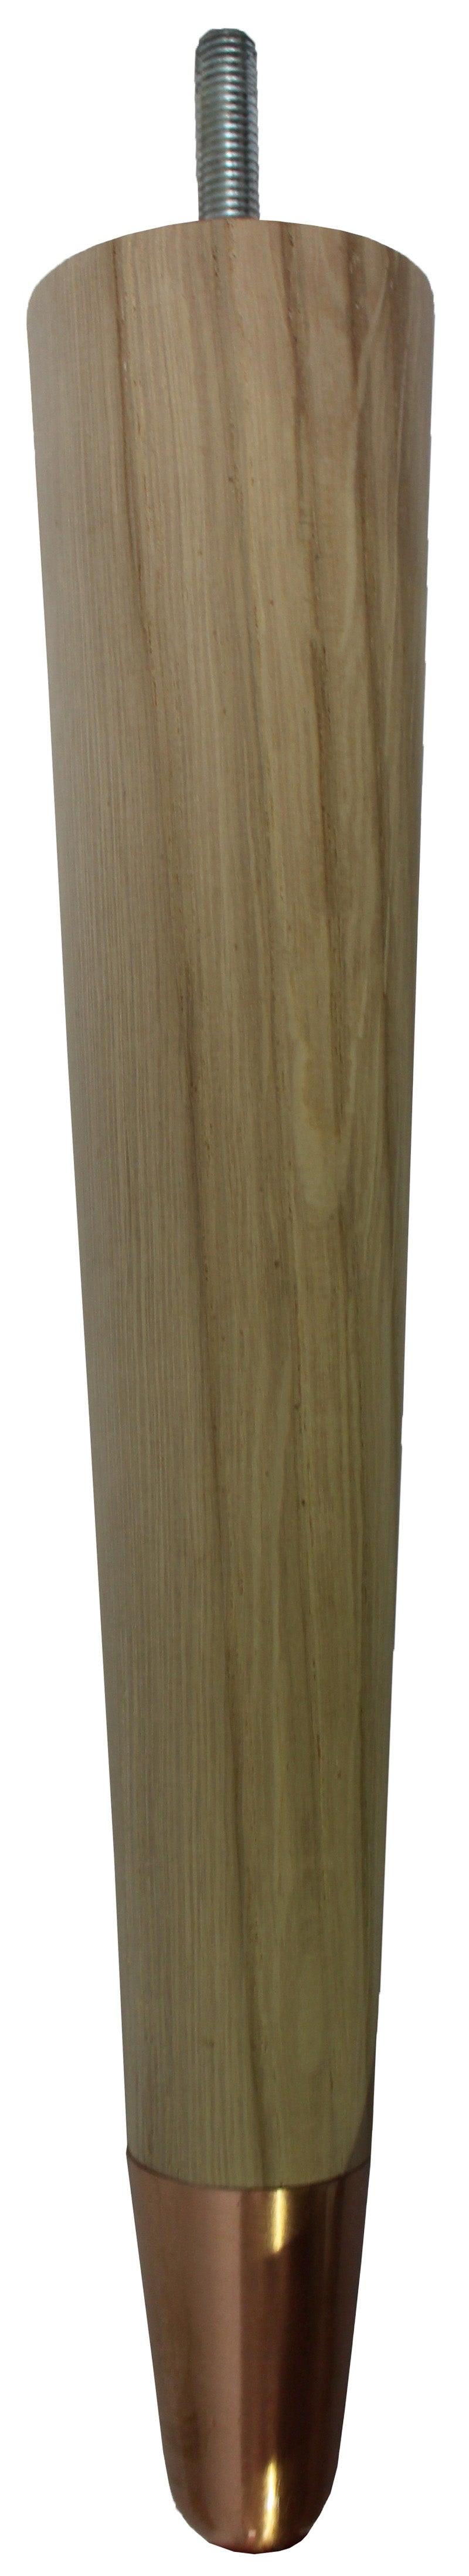 Liva Solid Oak Tapered Furniture Legs - Raw Finish - Copper Slipper Cups - Set of 4